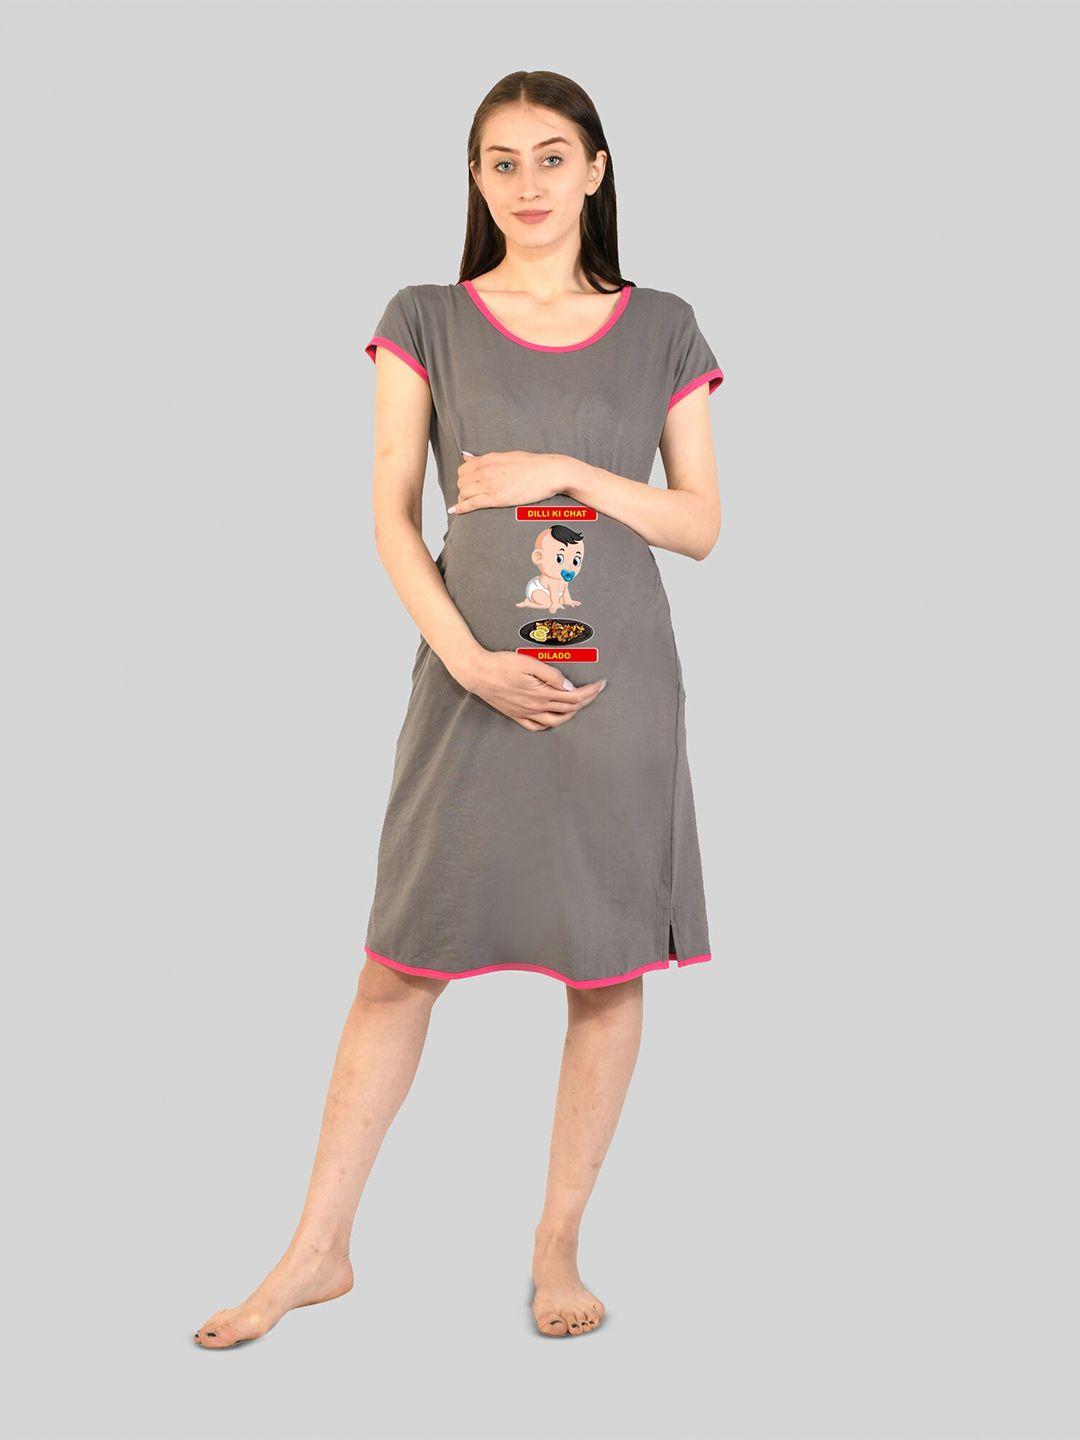 sillyboom-graphic-printed-t-shirt-maternity-nightdress